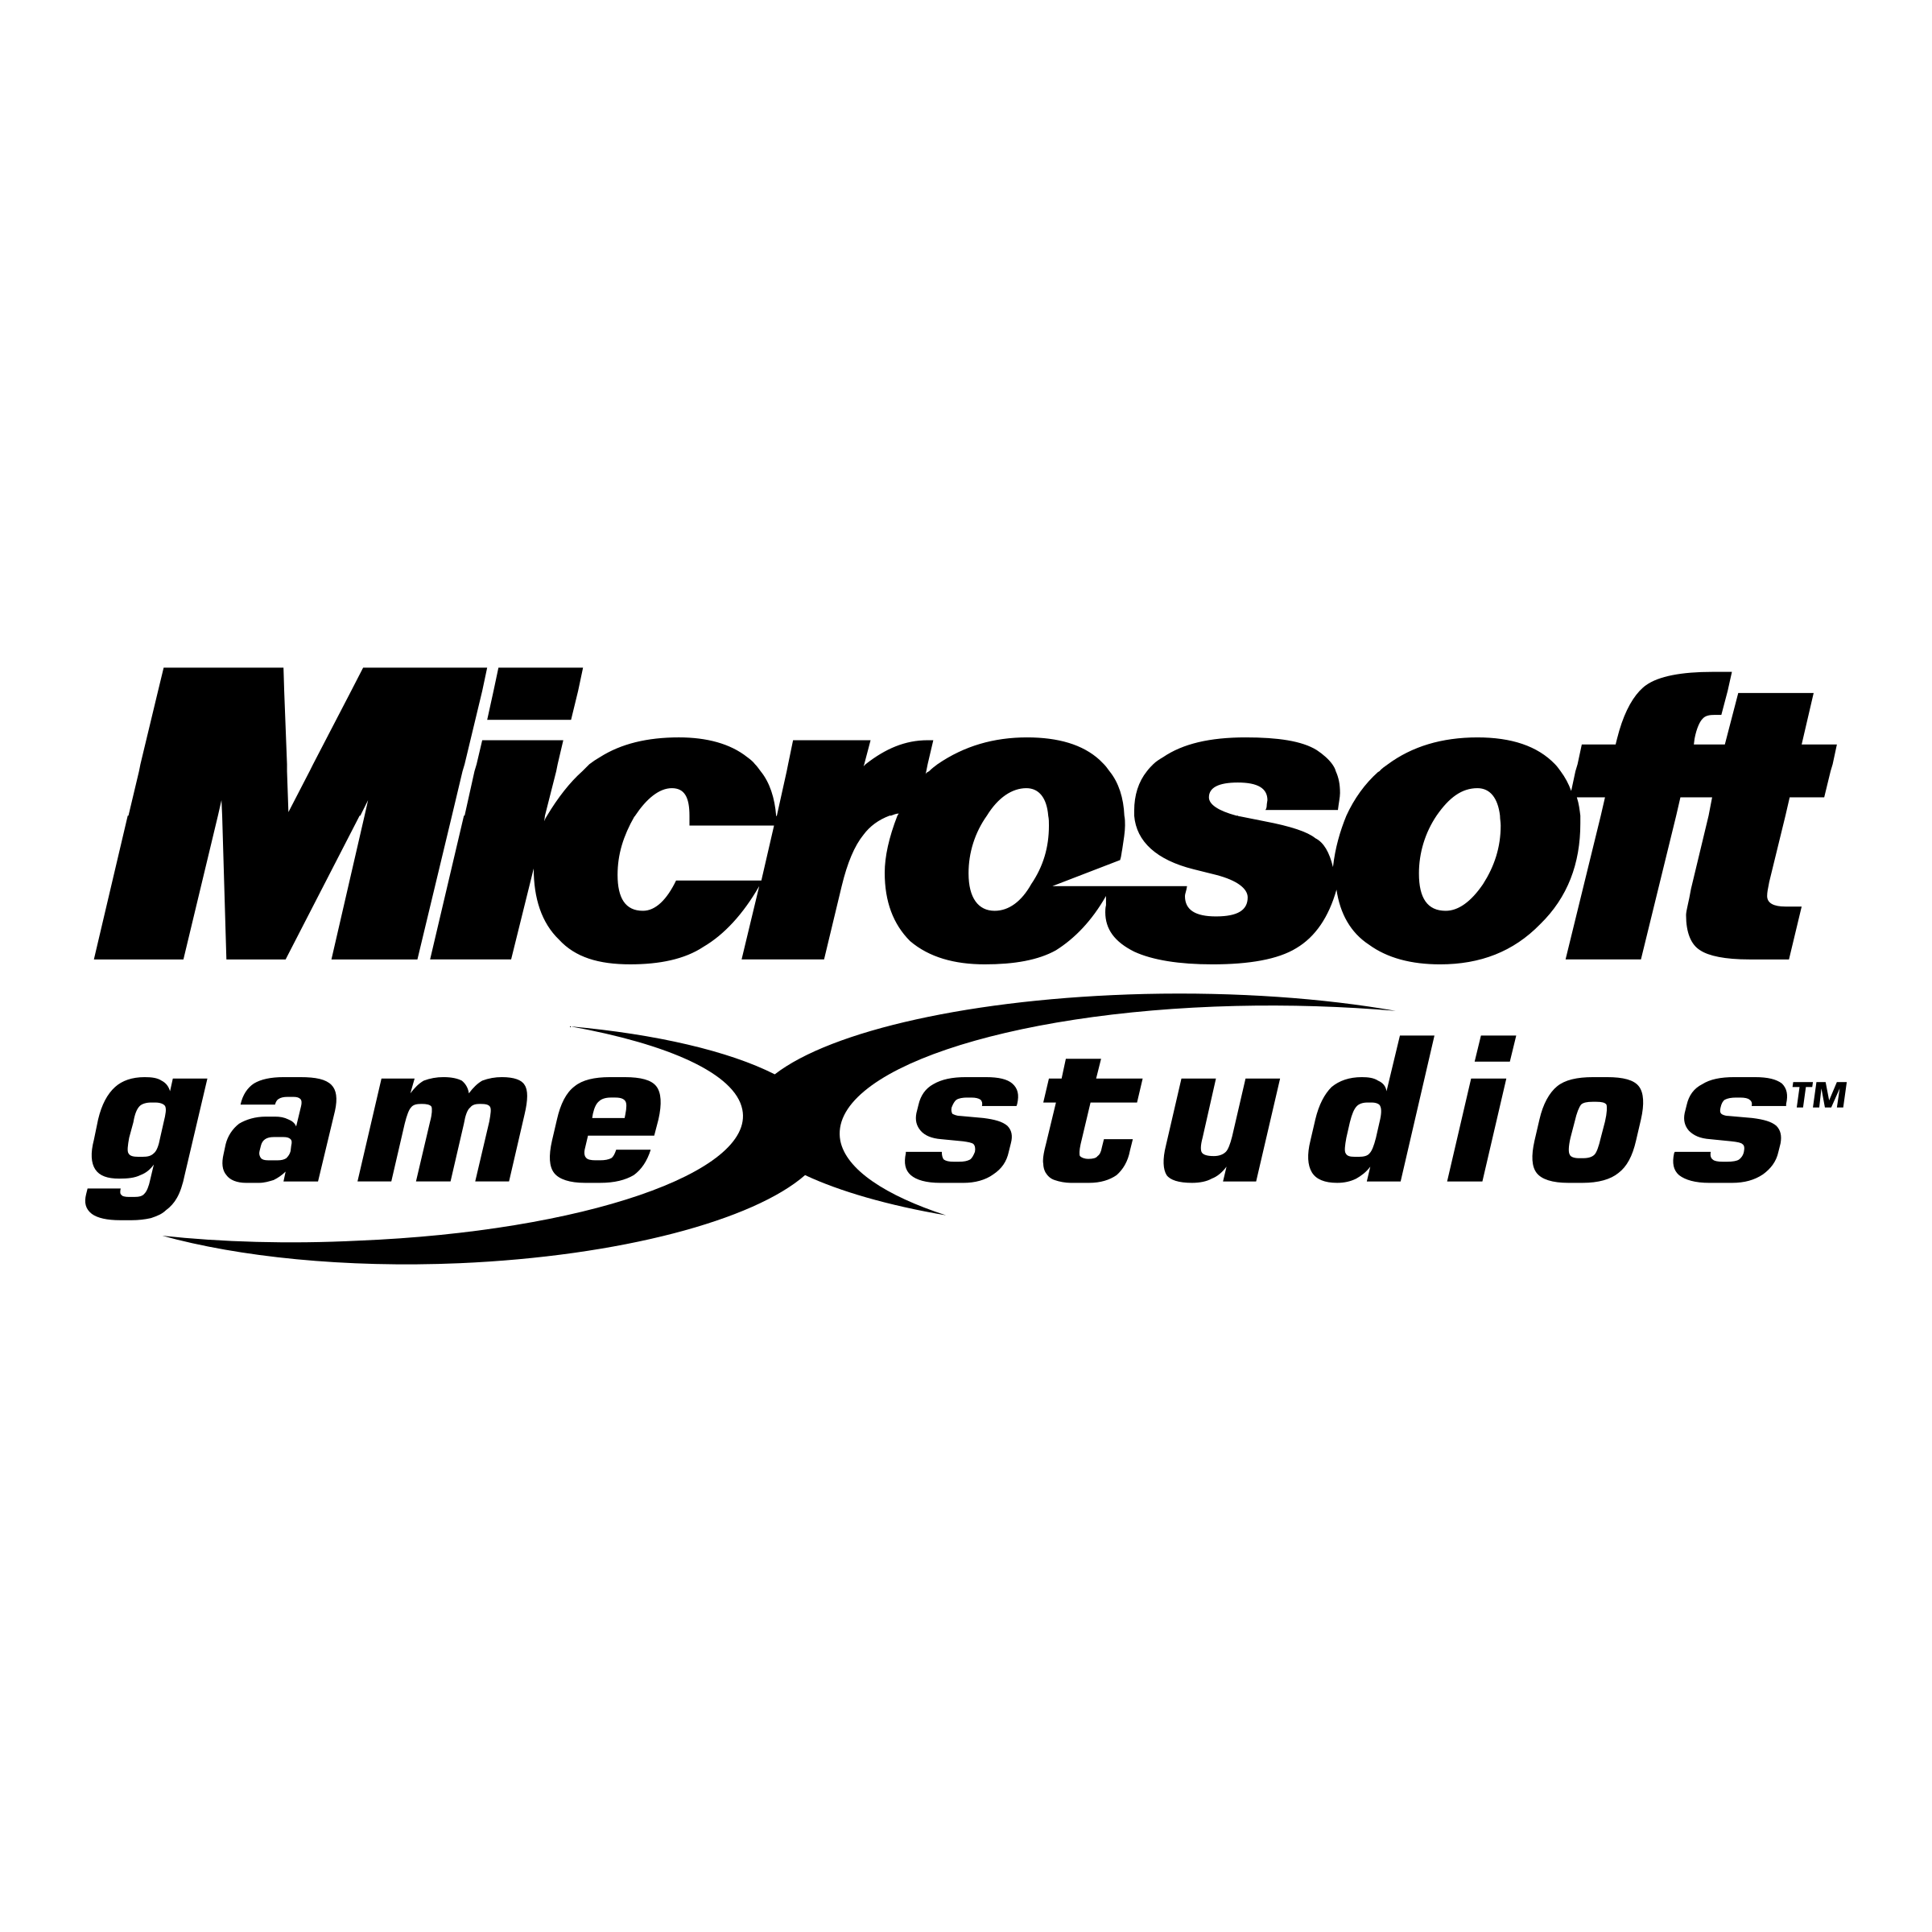 Microsoft Studios Logo - Microsoft Game Studios Logo PNG Transparent & SVG Vector - Freebie ...